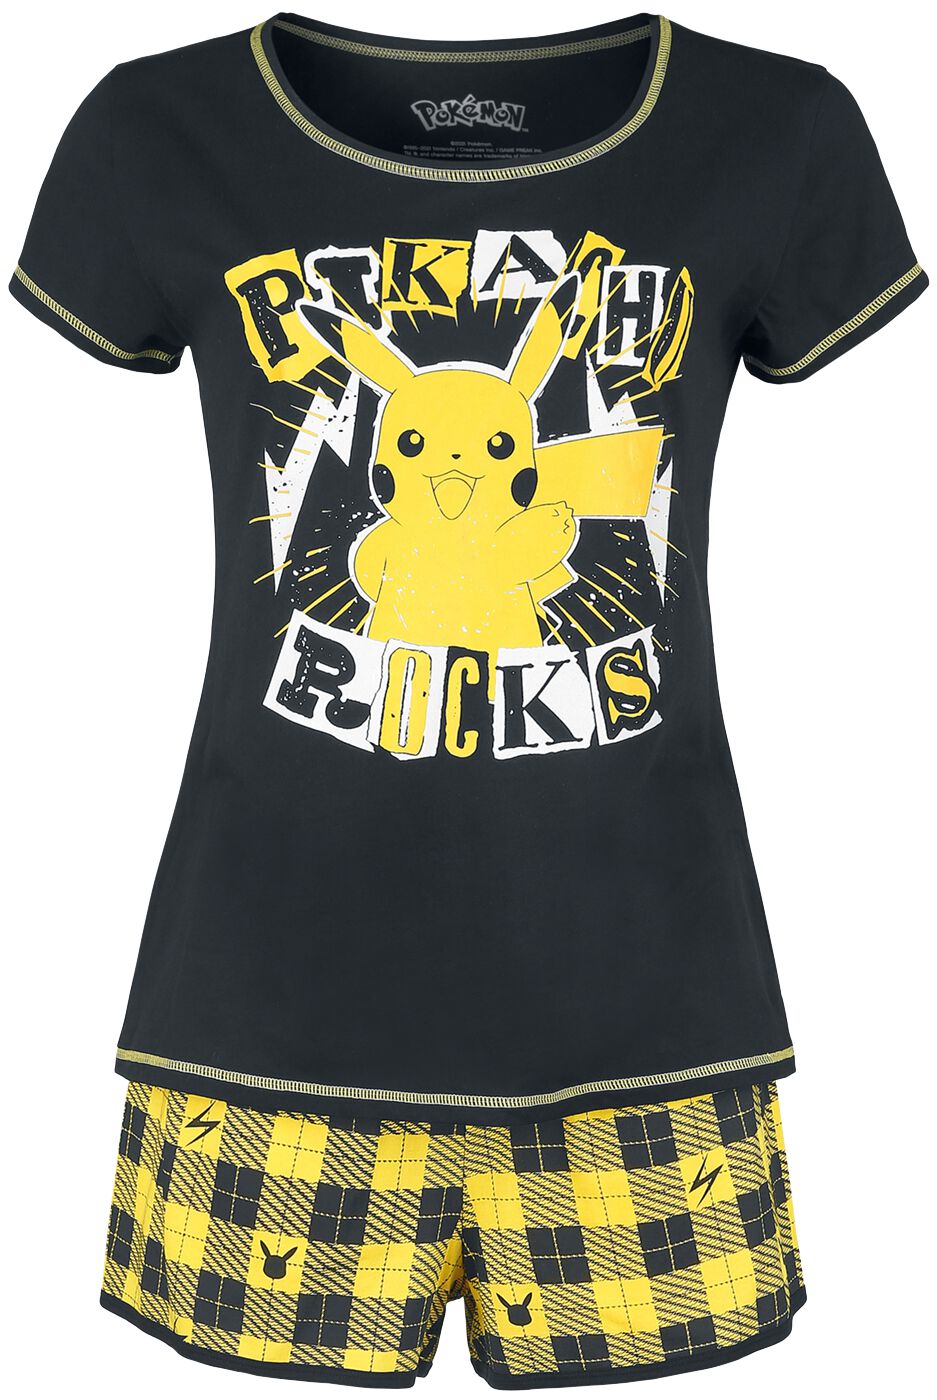 Pokémon Pikachu - Rocks Pyjama black yellow